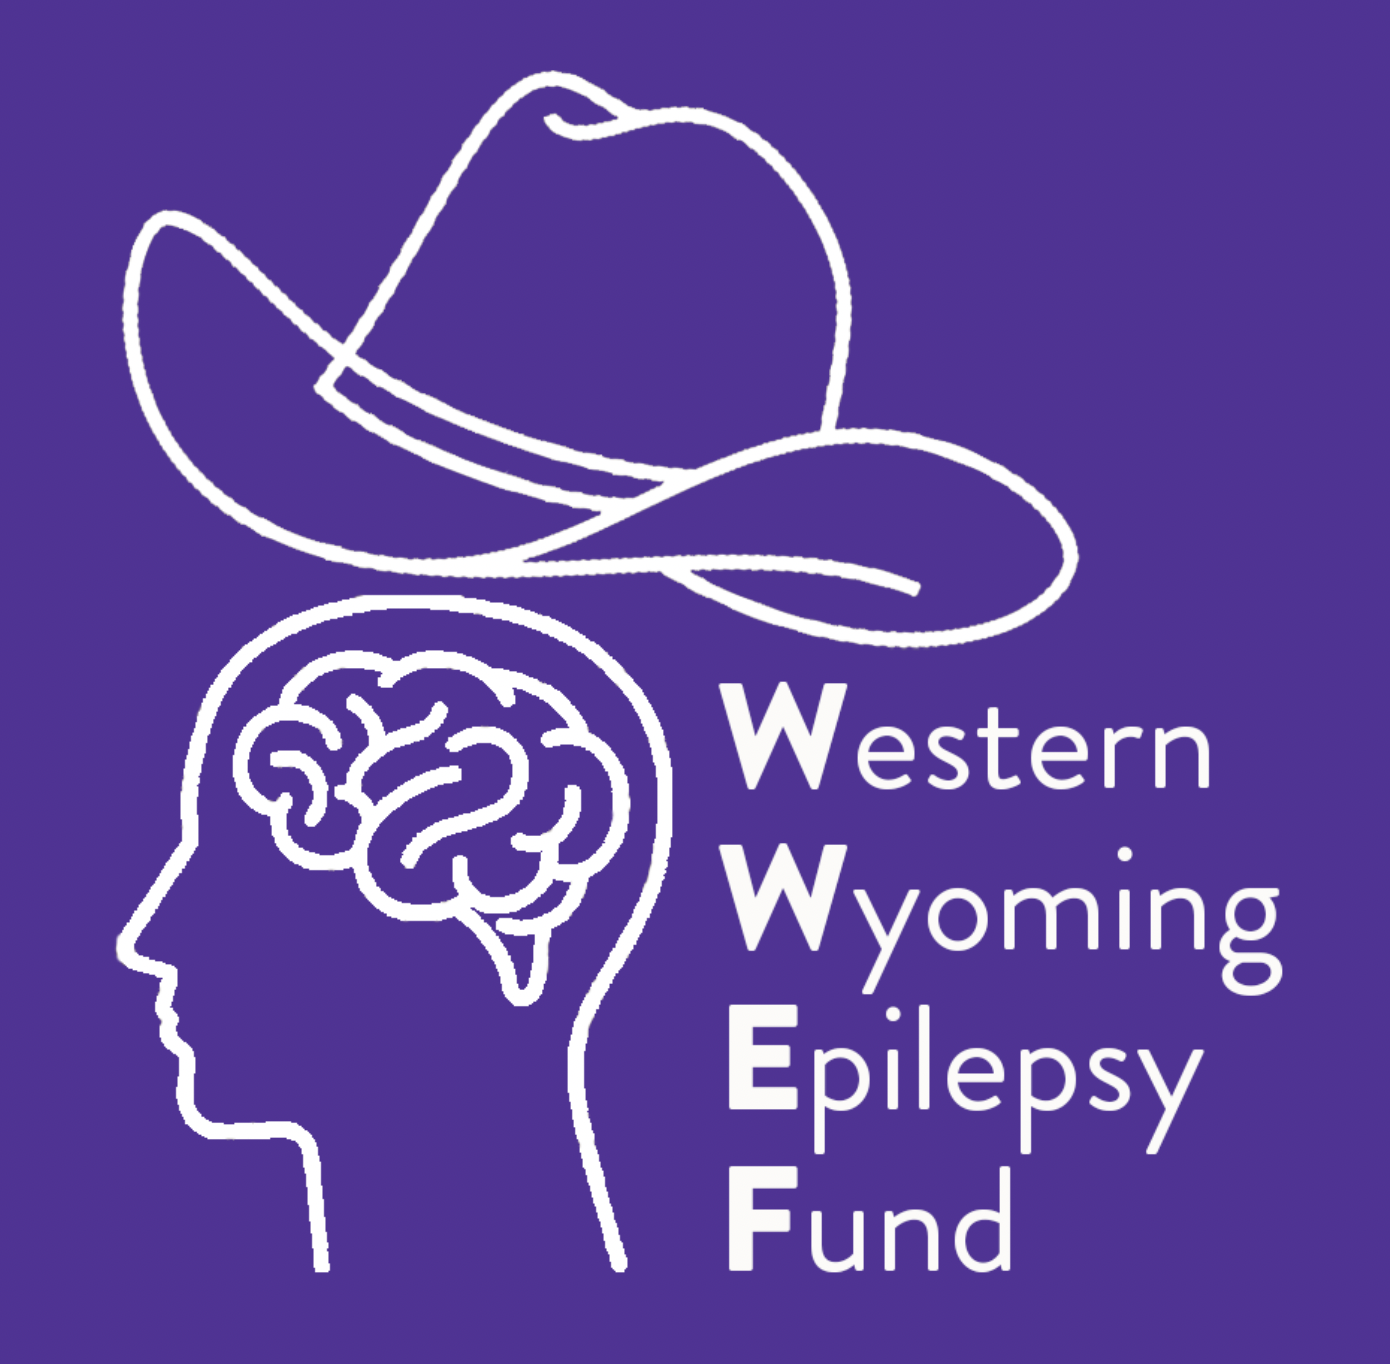 Western Wyoming Epilepsy Fund